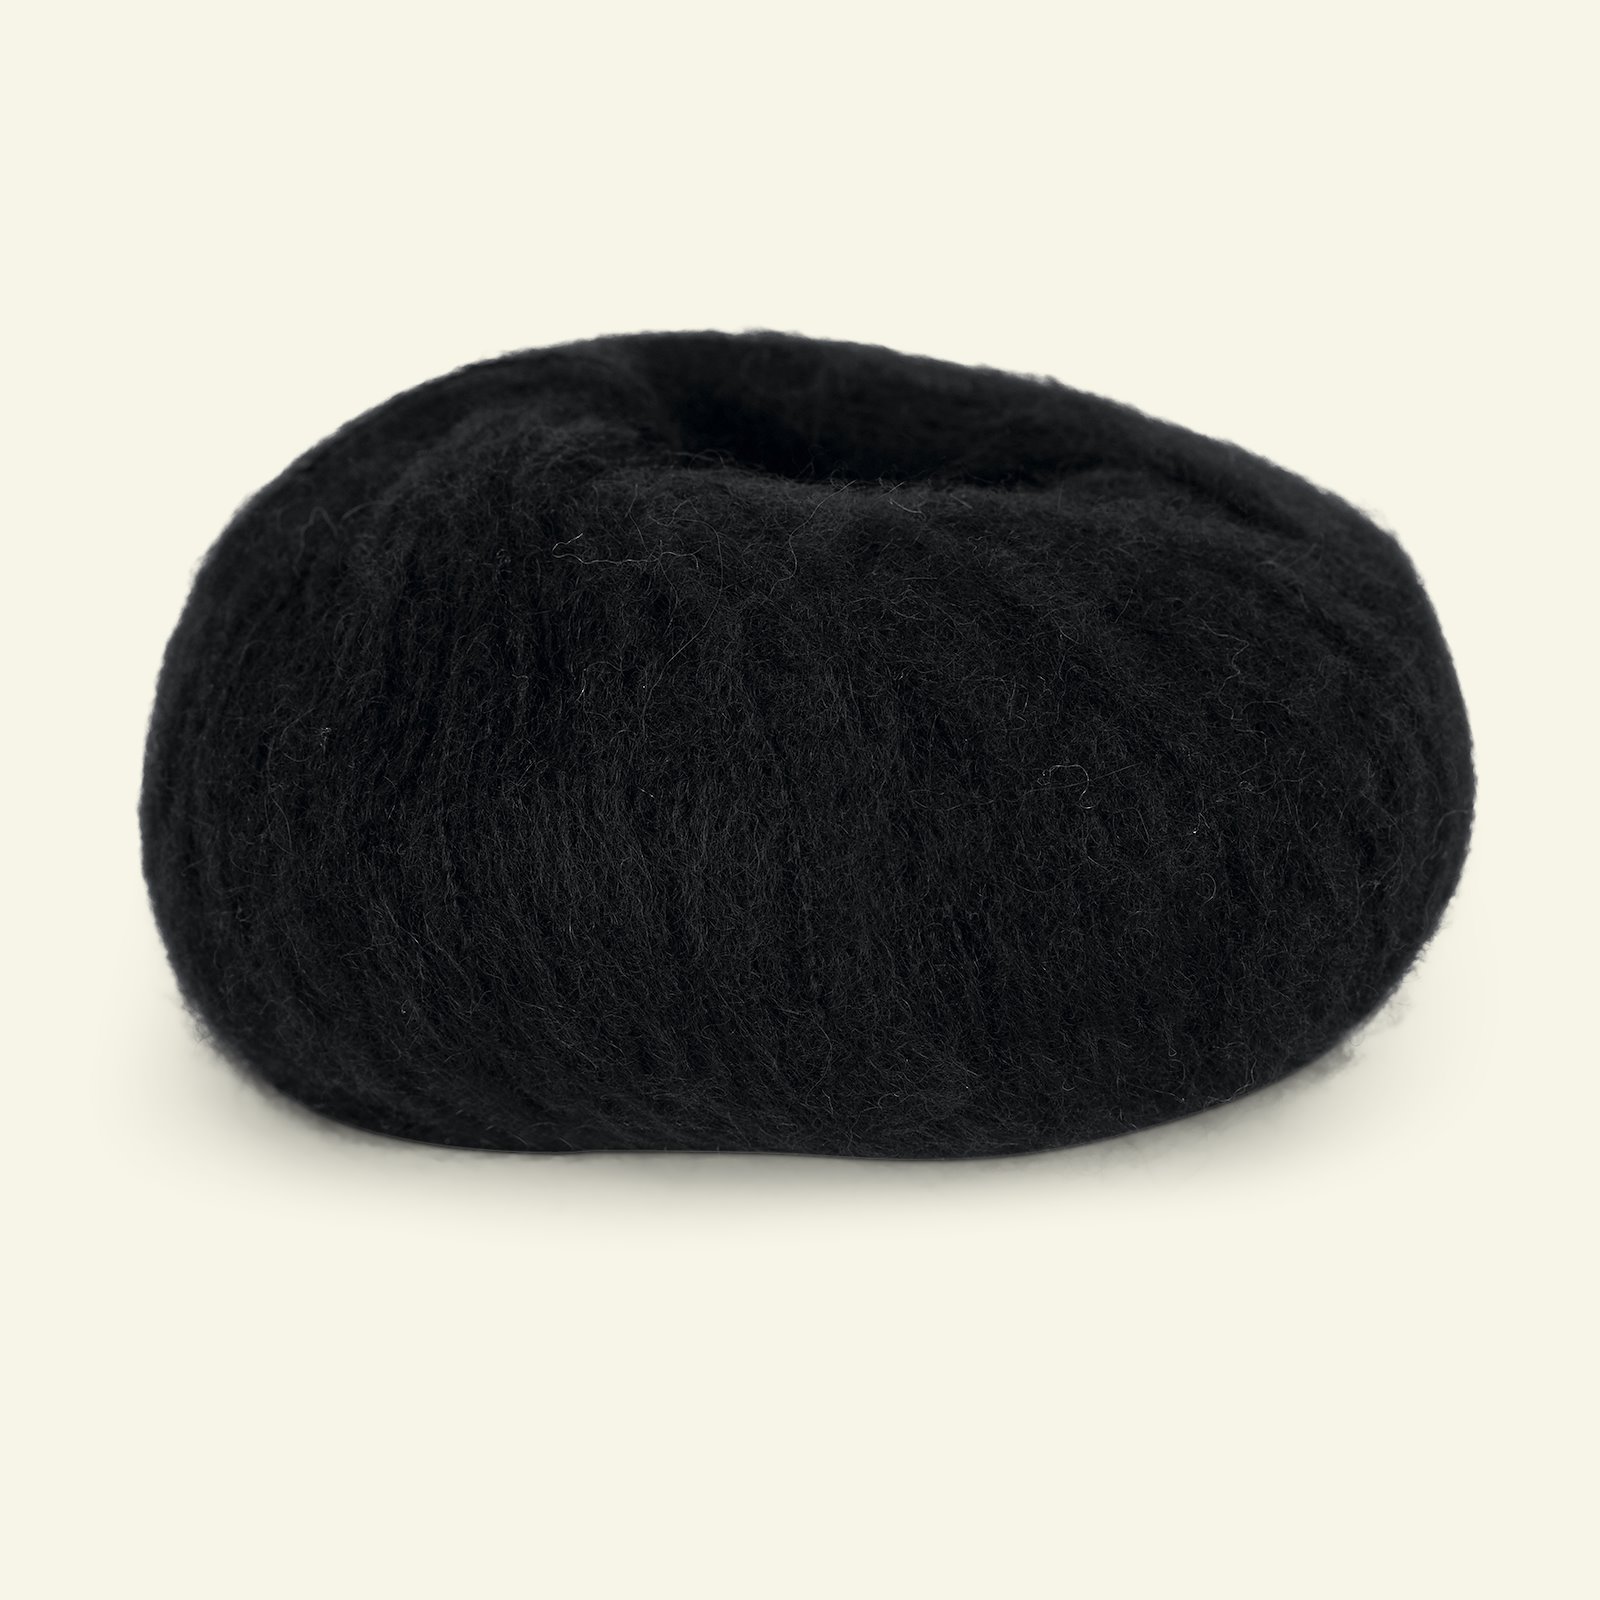 Du Store Alpakka, airy alpaca yarn "Faerytale", black (719) 90000582_pack_b